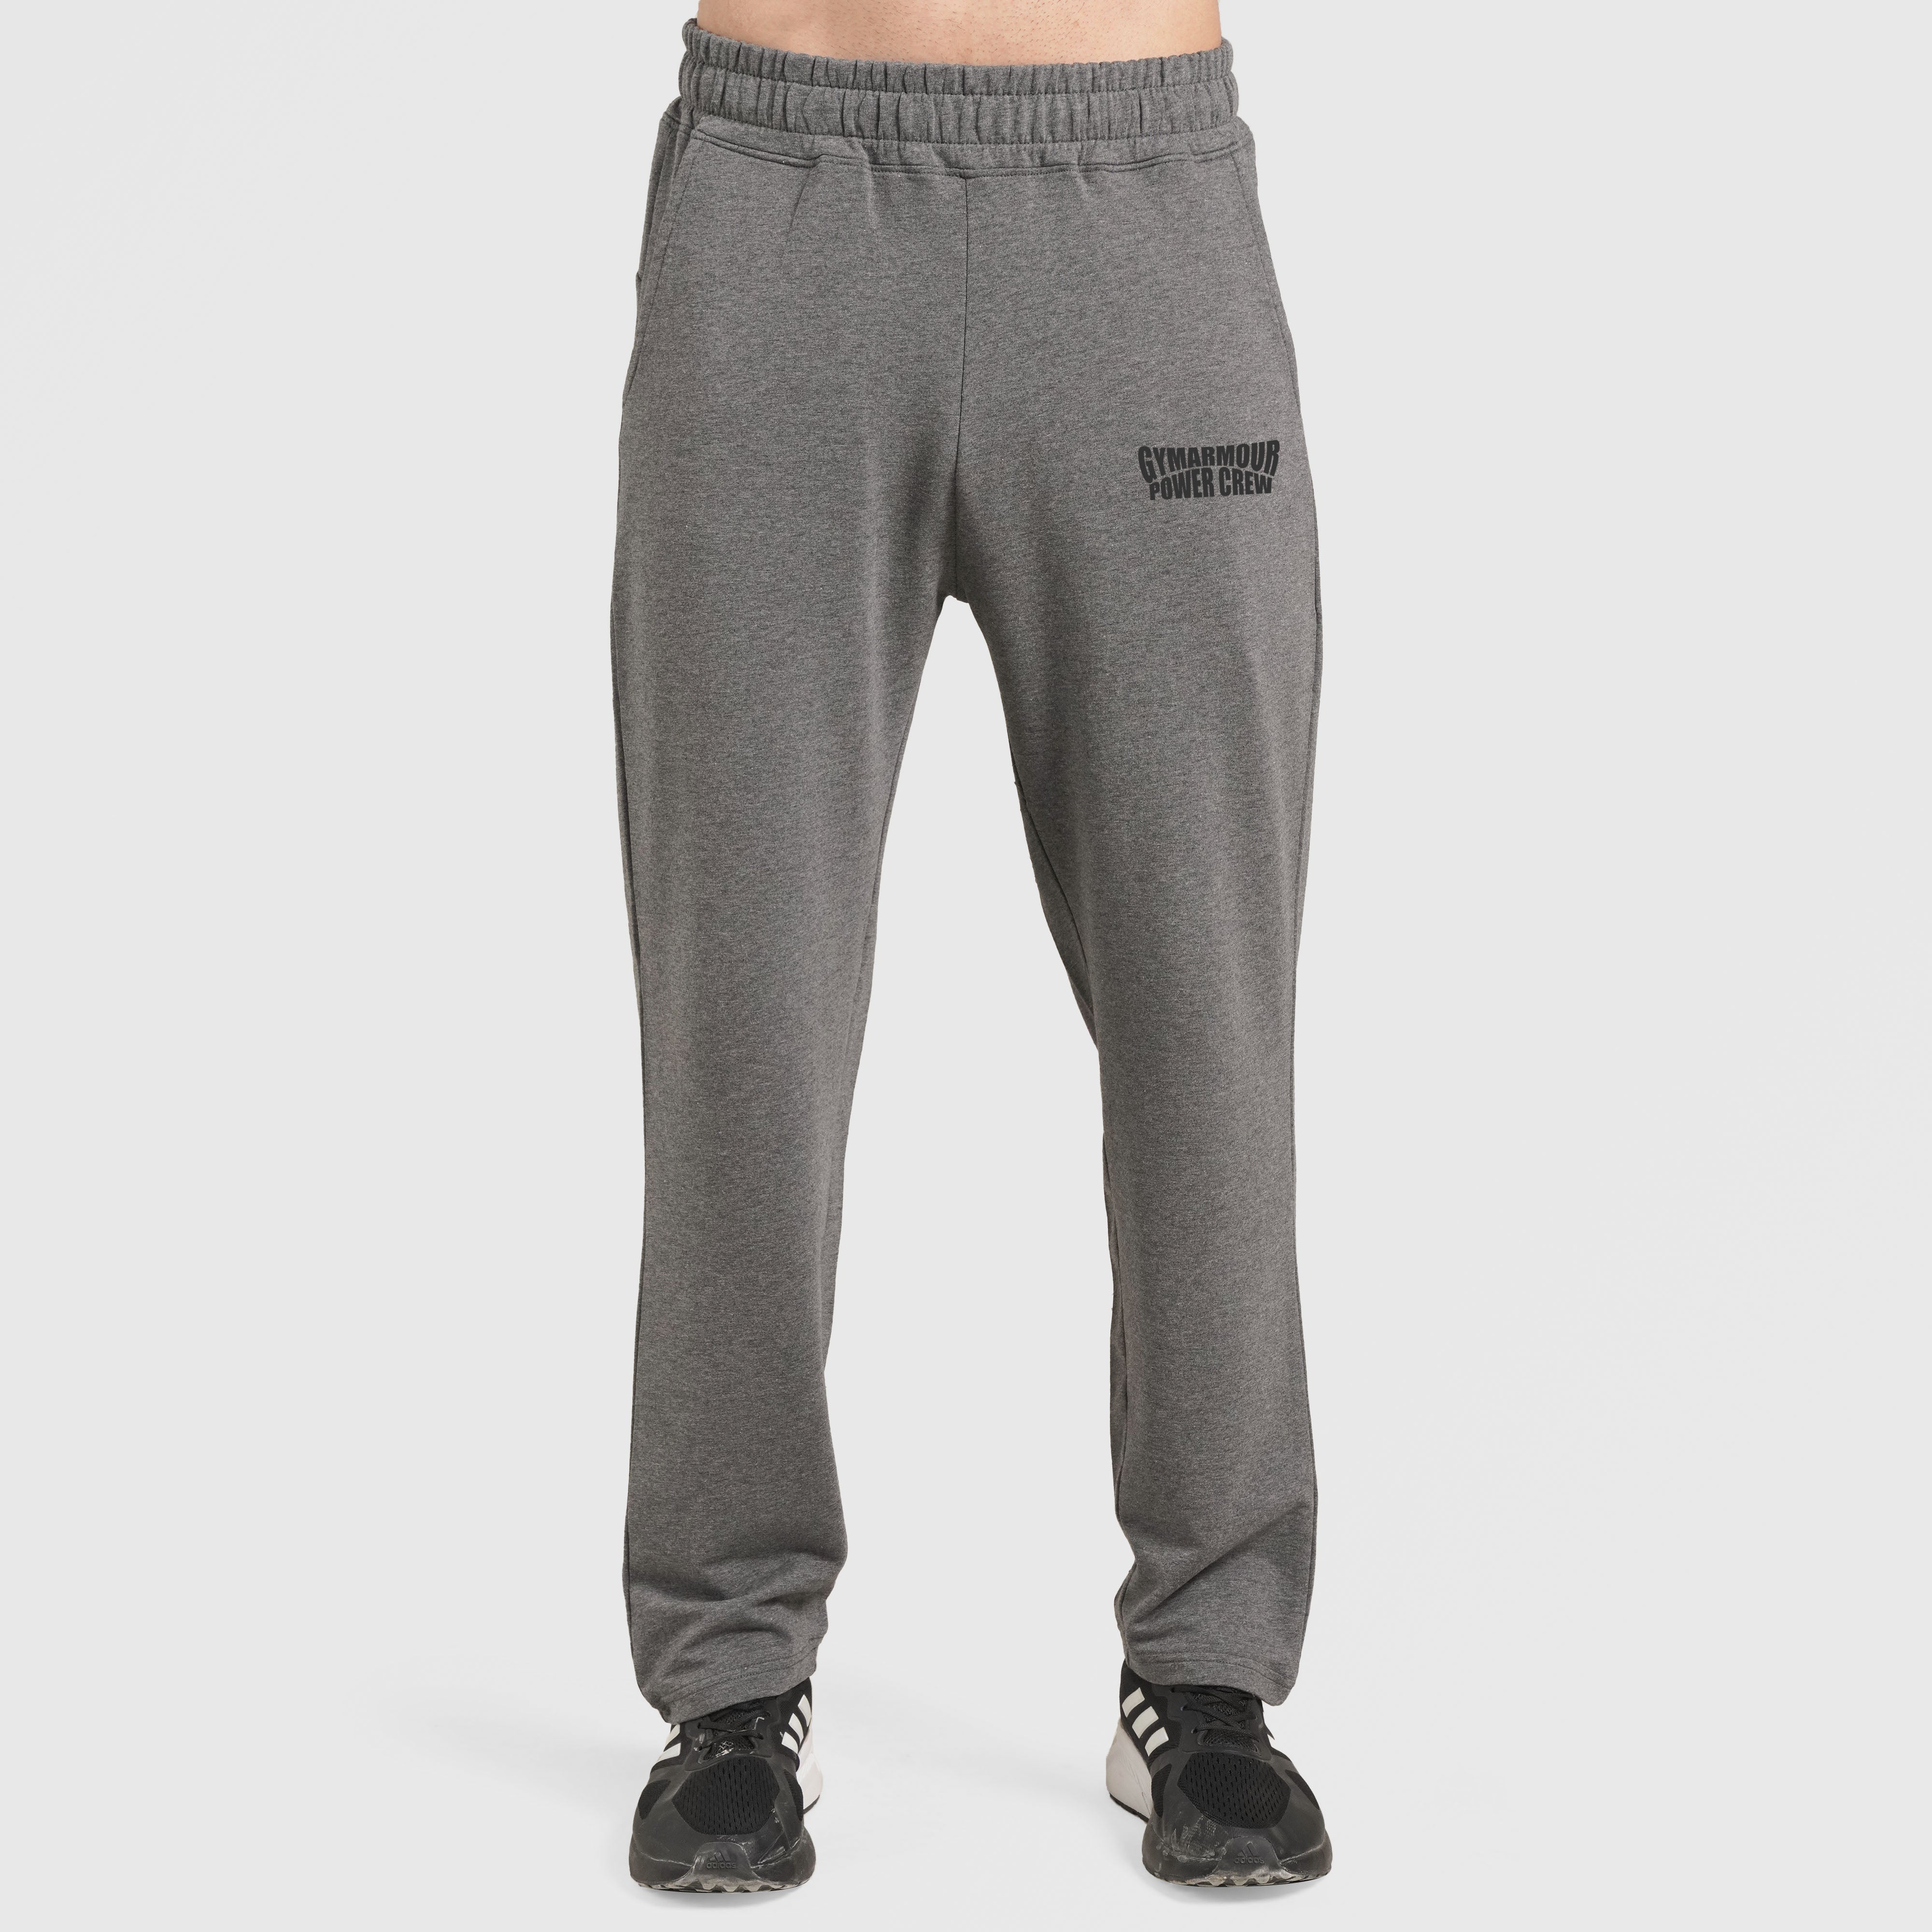 Vac Trousers (Grey)